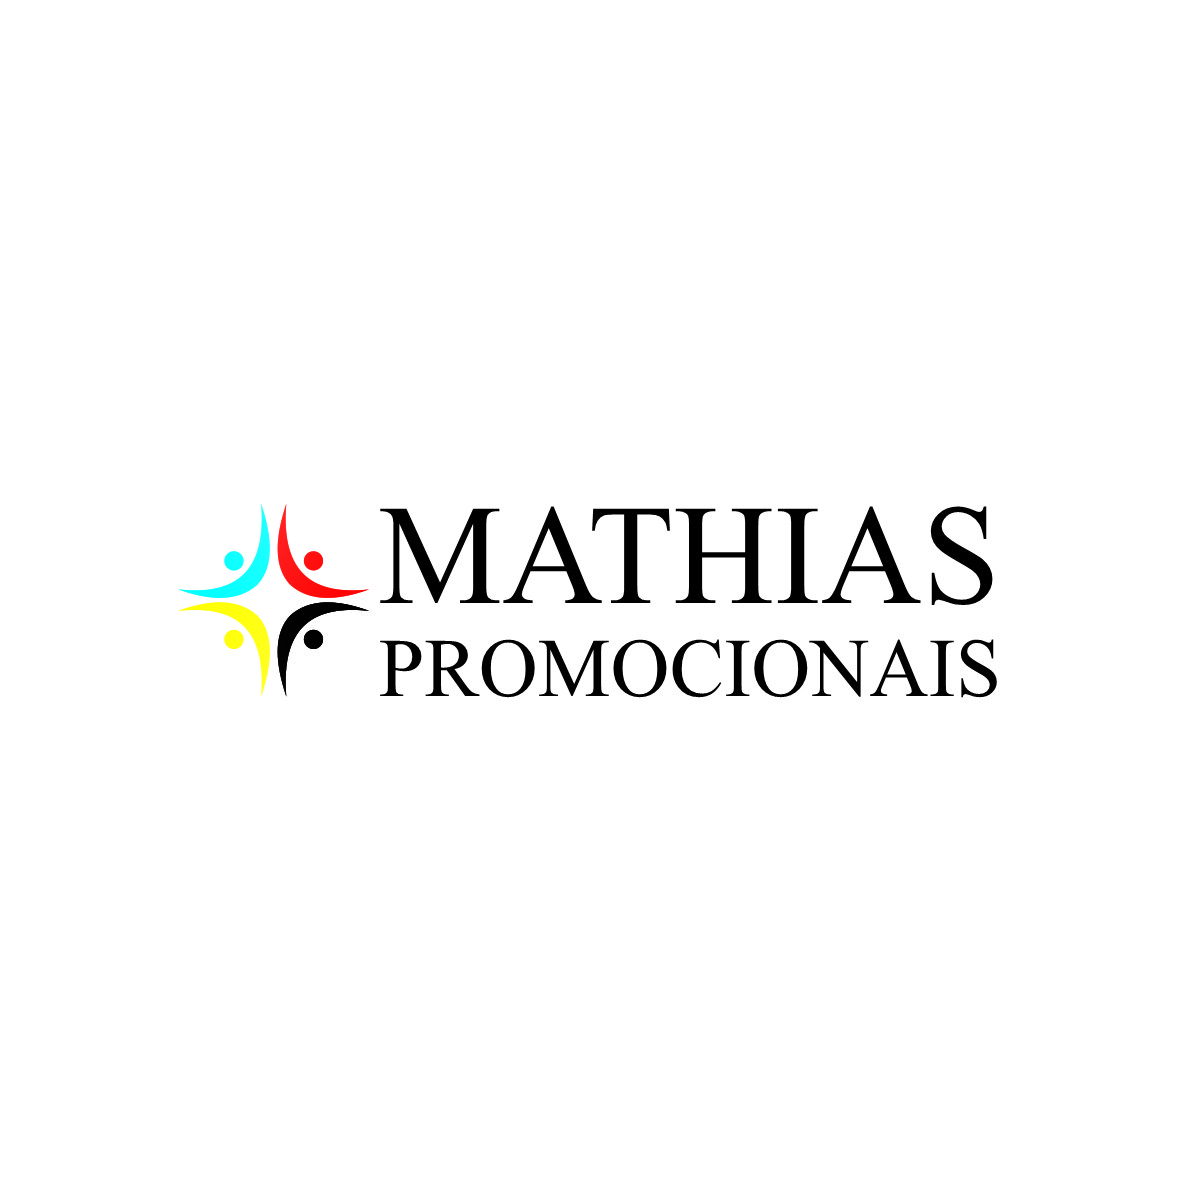 Mathias Promocionais.